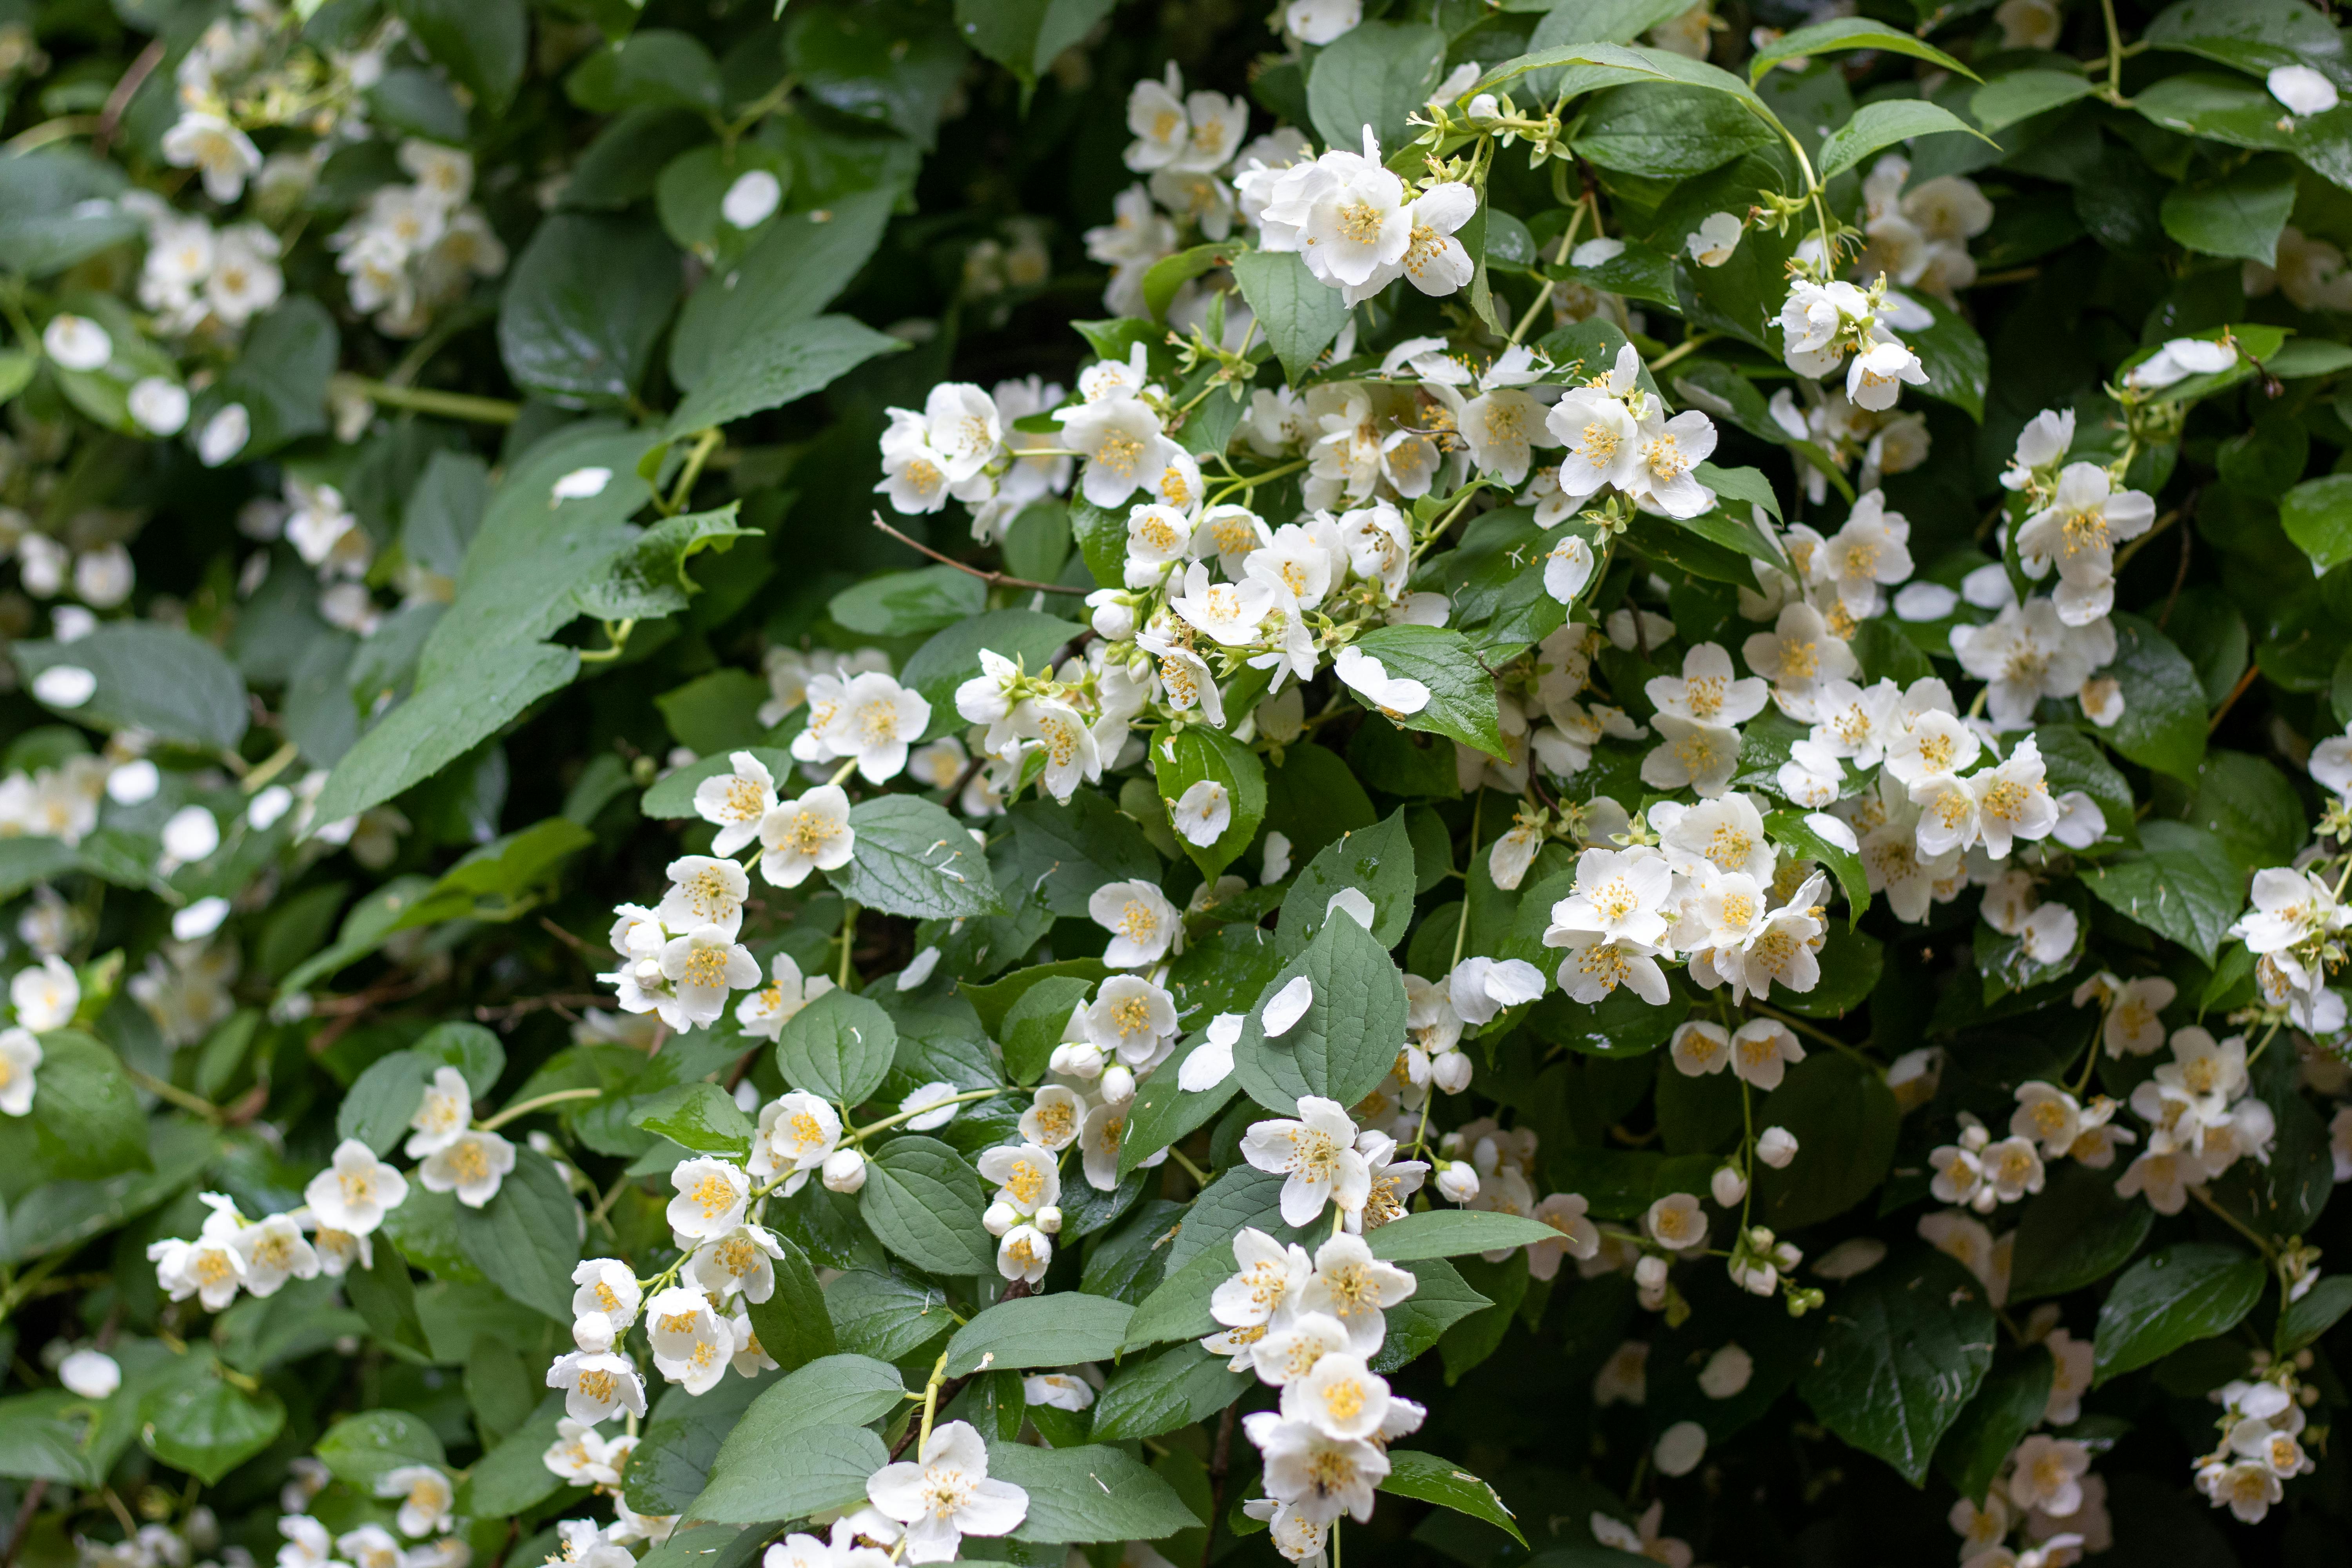 Jasmine Flower Photos, Download The BEST Free Jasmine Flower Stock Photos &  HD Images